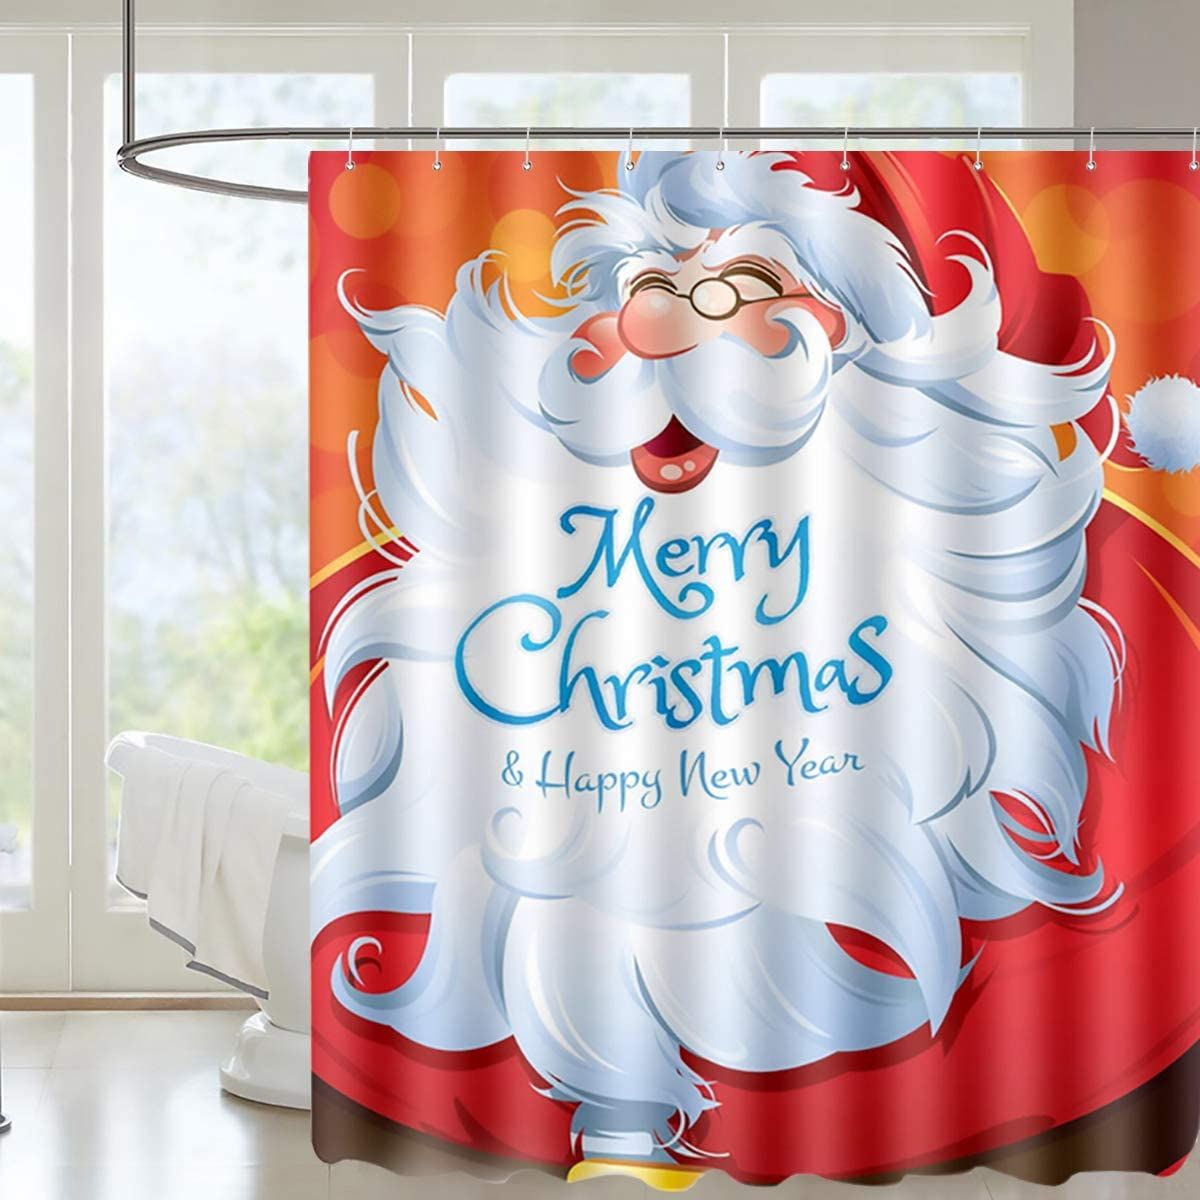 HEIMIU 3pcs/set Christmas Toilet Seat Cover and Rug Set Anti-Slip Microfiber Breathable Christmas Toilet Cover Decorations Set for Christmas Decorations Indoor Bathroom 19.7*31.5 inch A1 